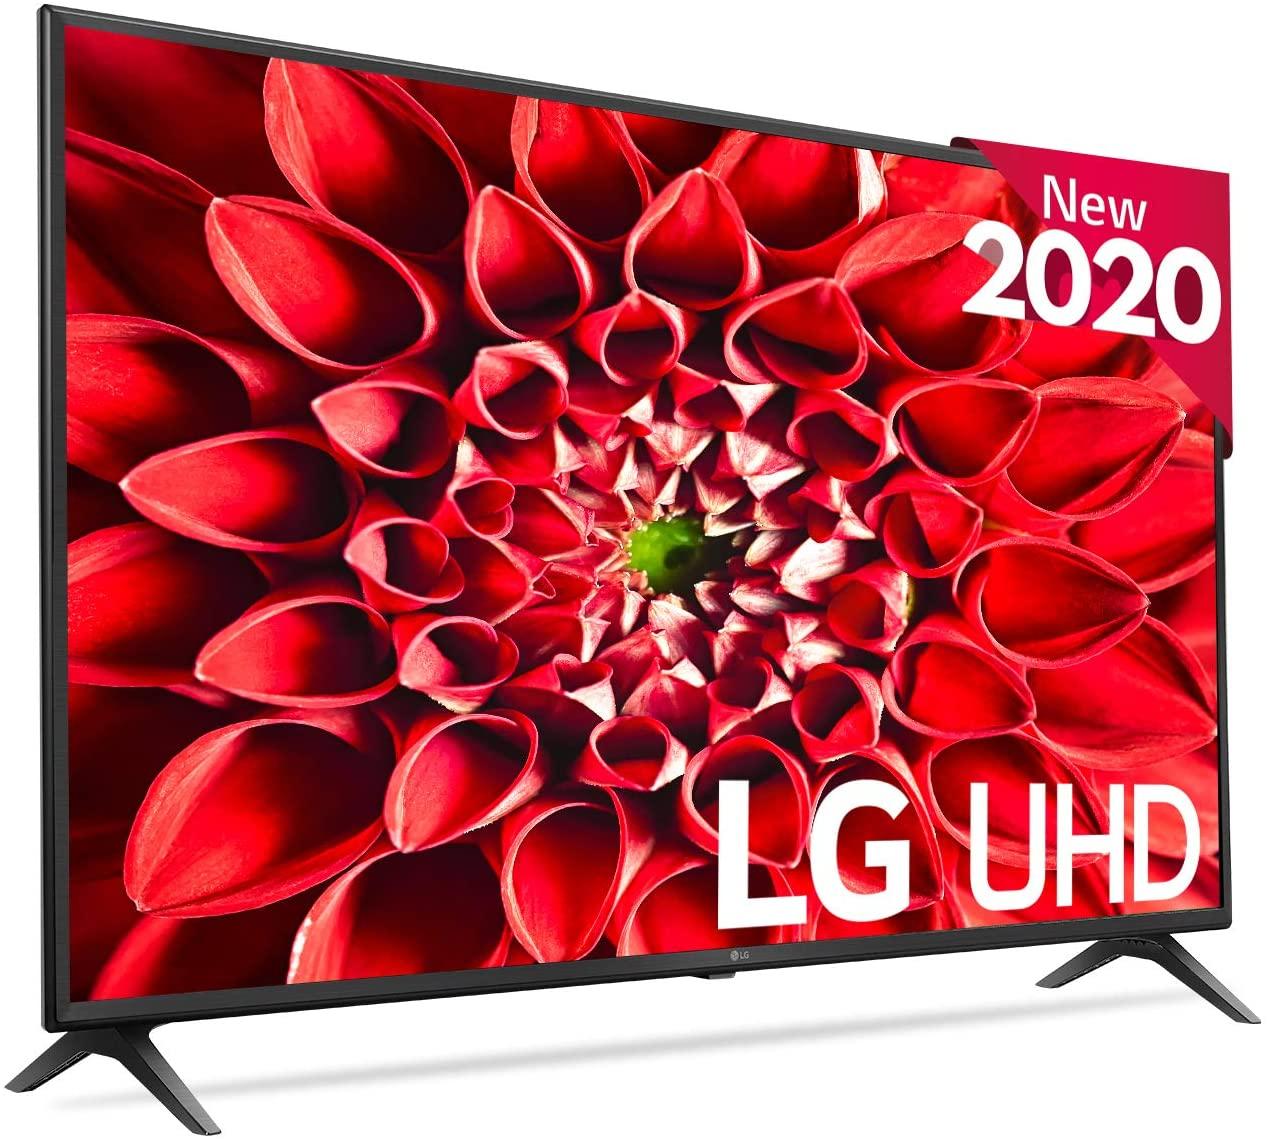 Smart TV LG 49UN7100 lateral